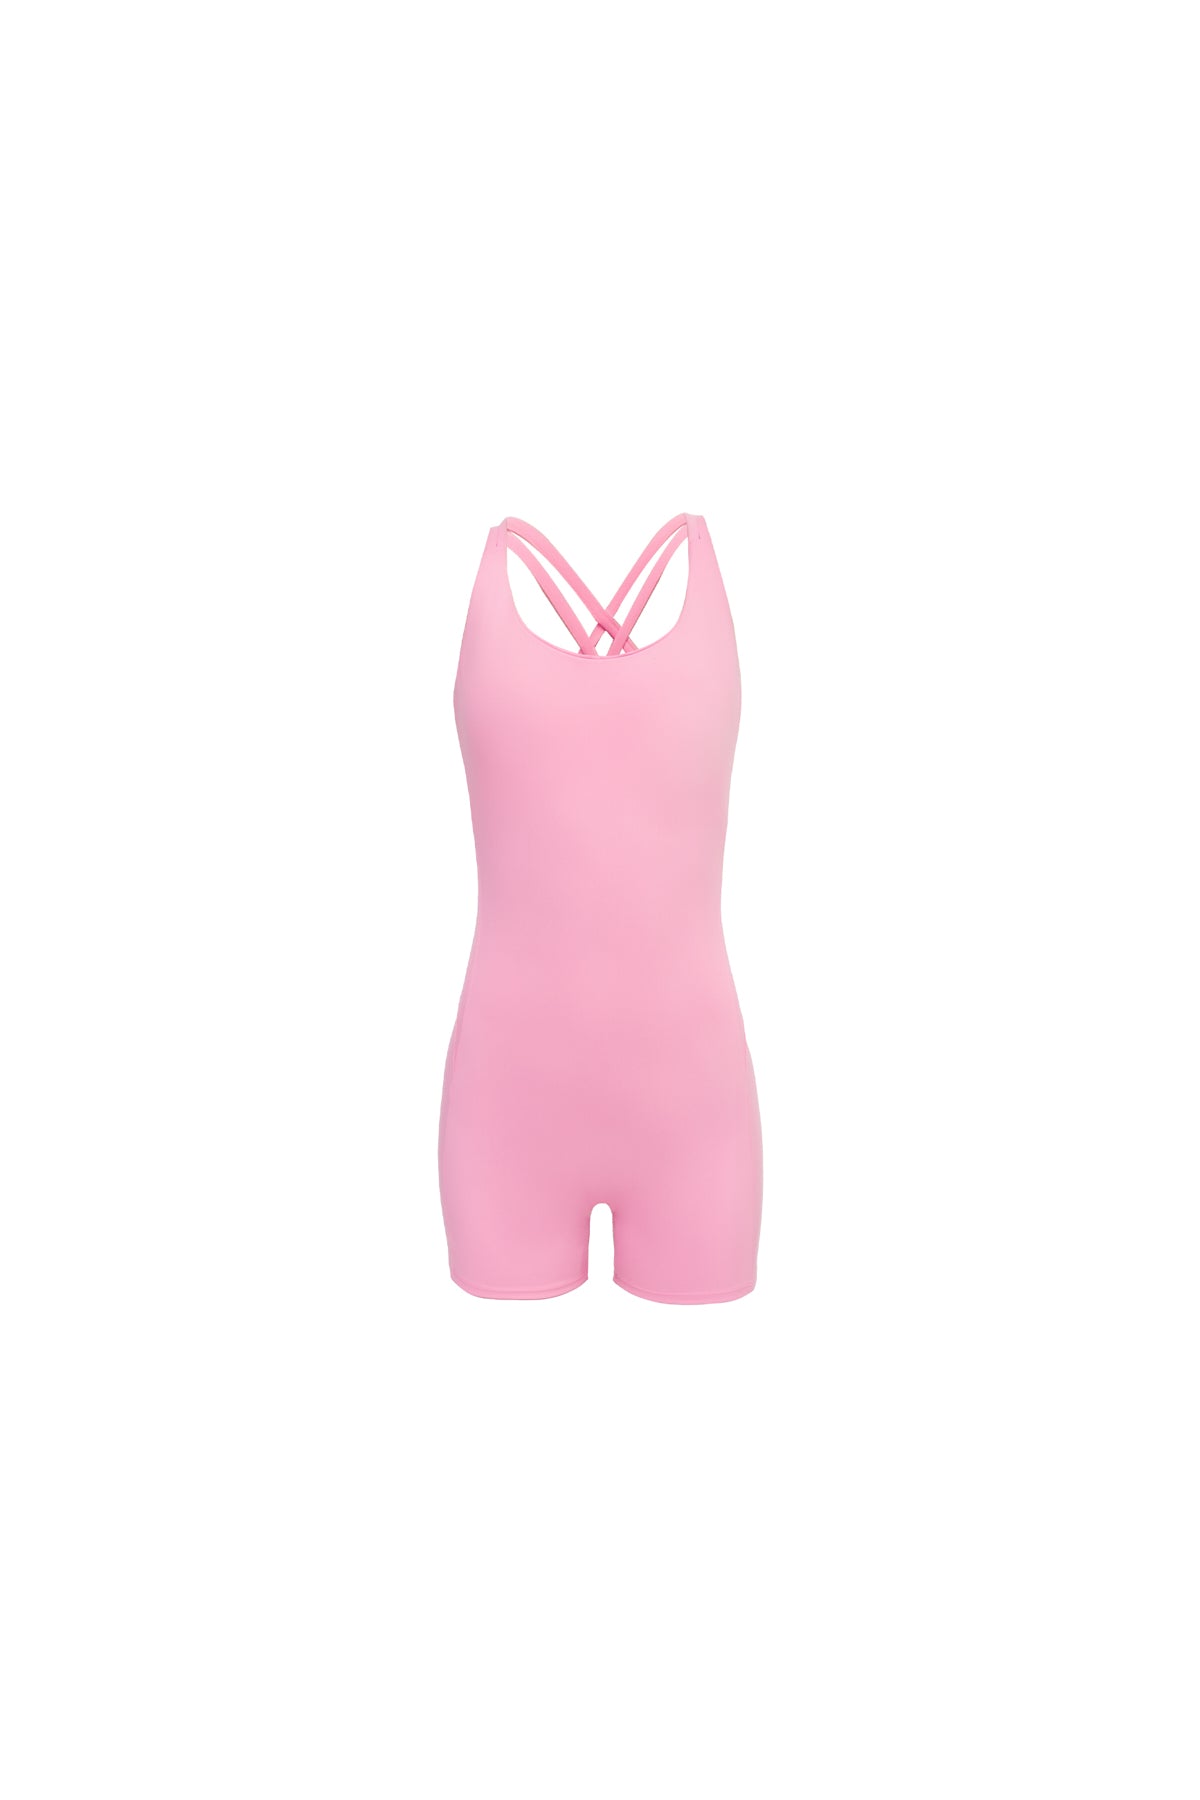 The Short Pink Bodysuit